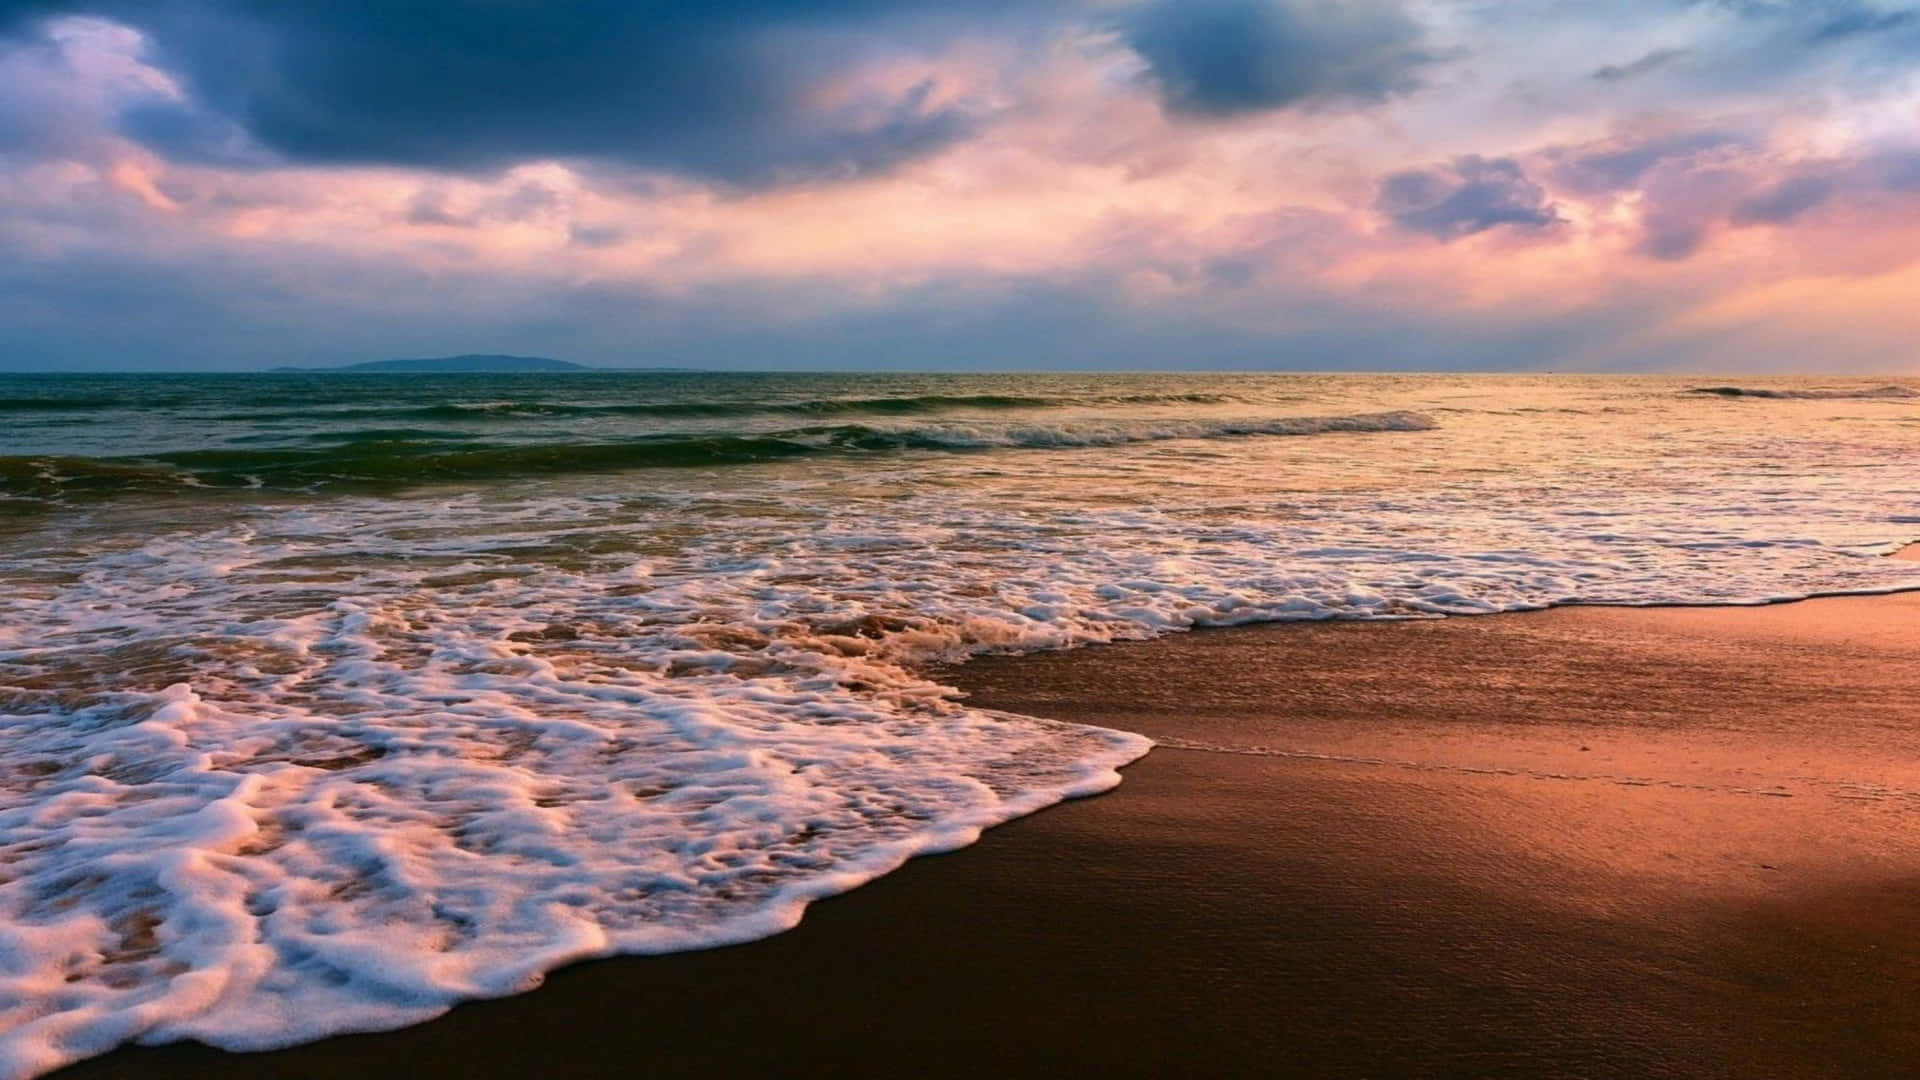 Tranquil Ocean View on iPad in 4K Resolution Wallpaper